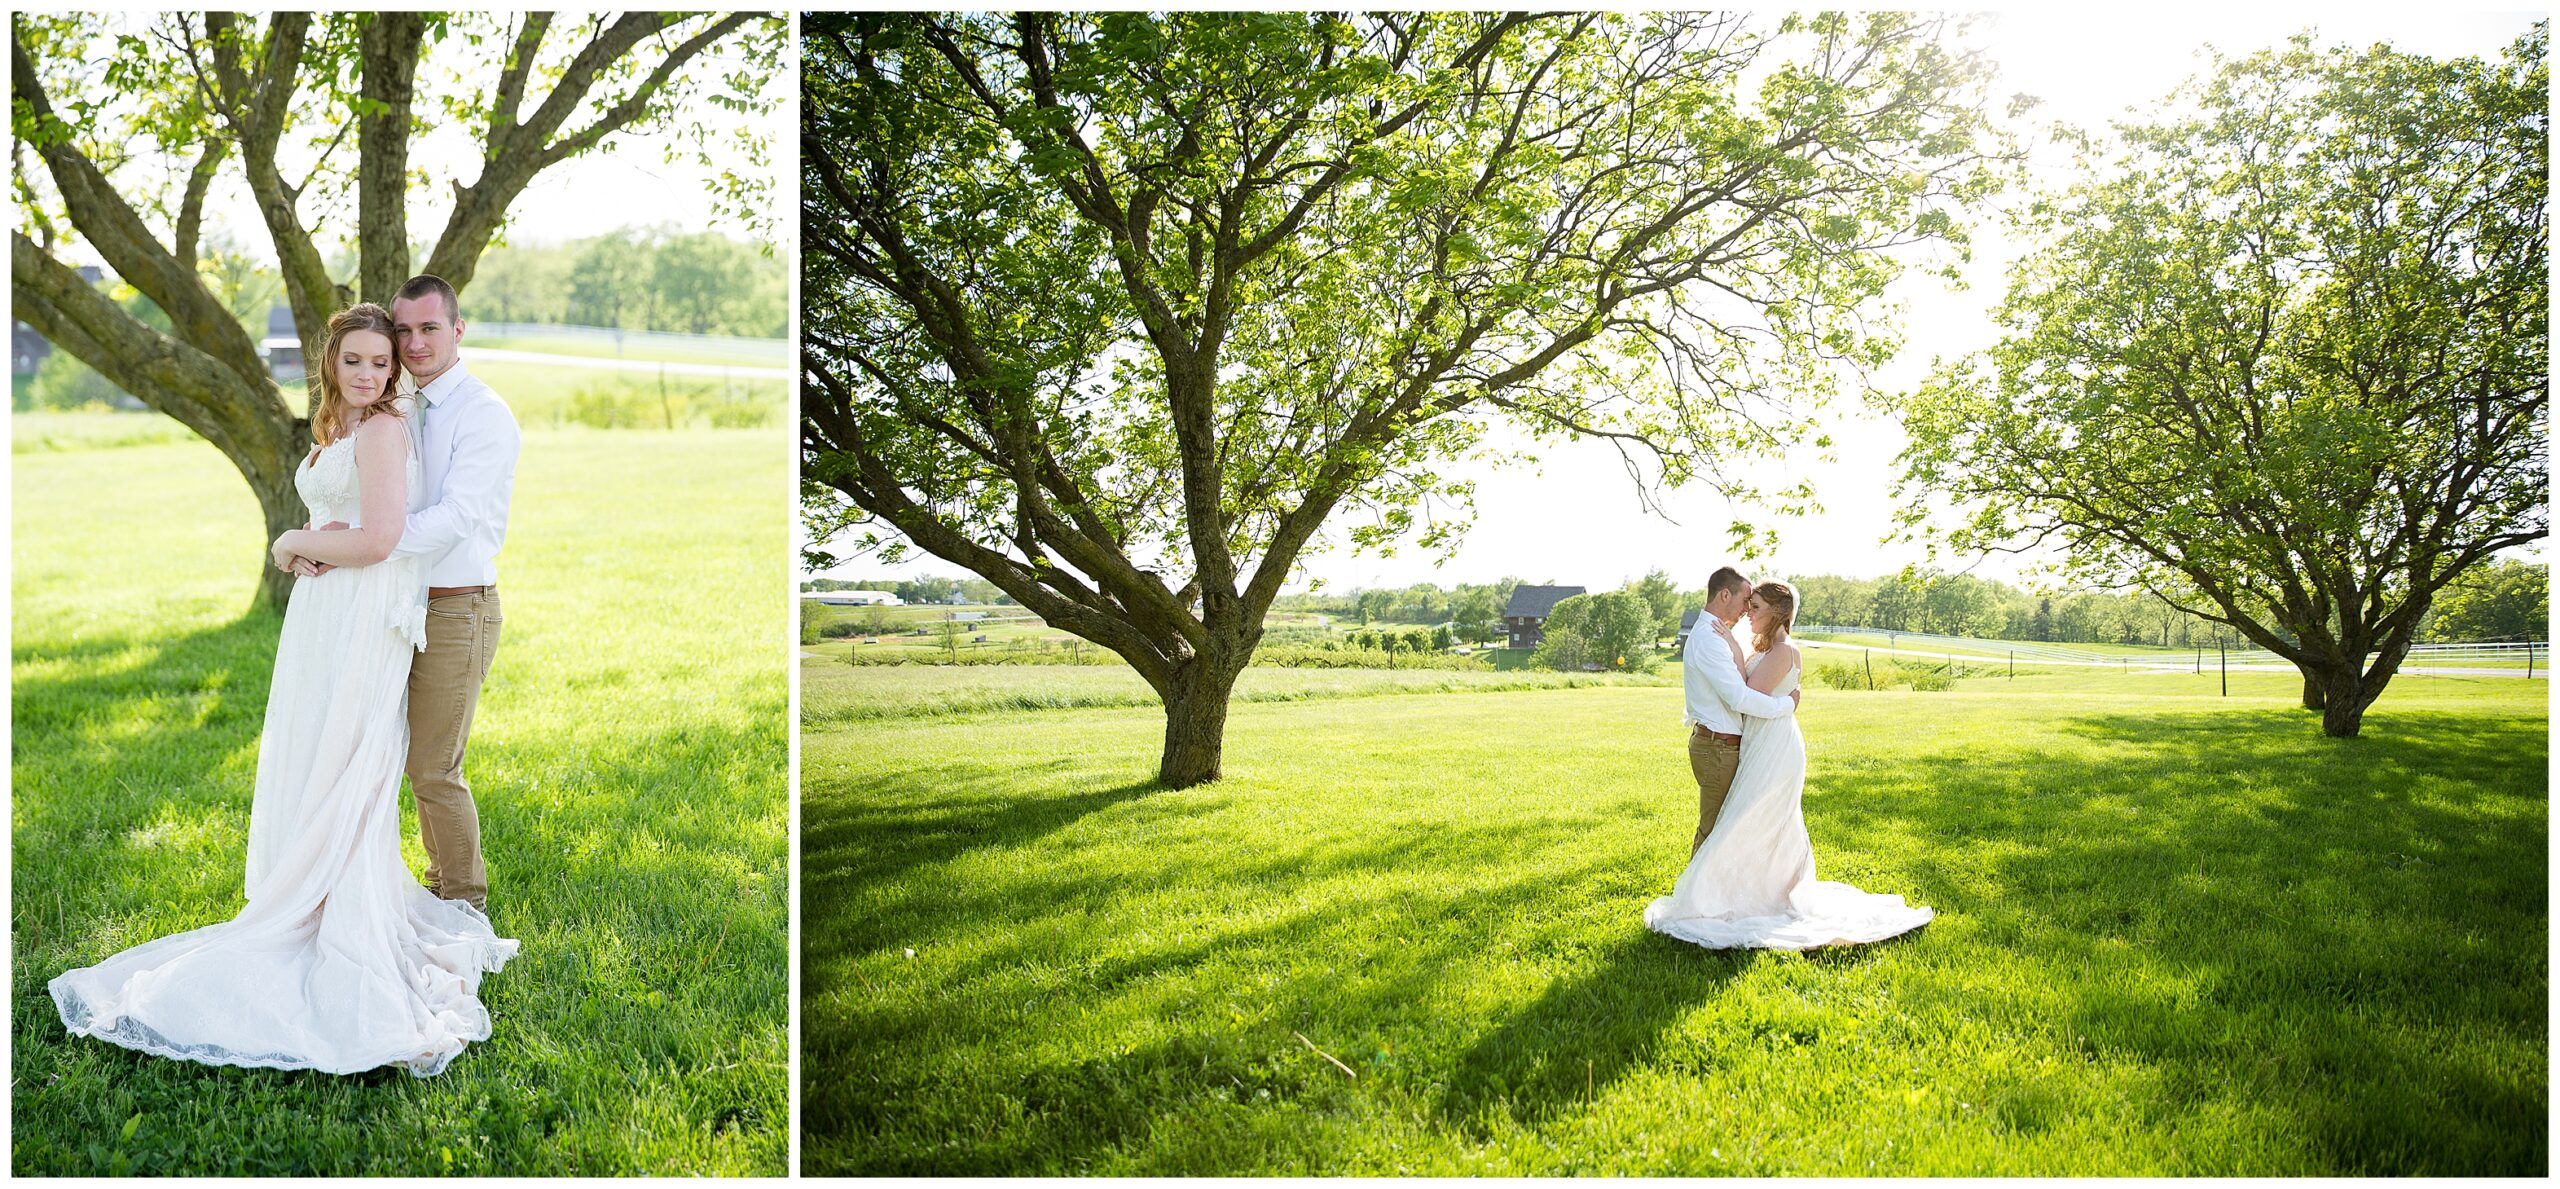 Cooper's Ridge wedding Boonville Missouri, romantic portraits wedding photography by Bella Faith Photography 